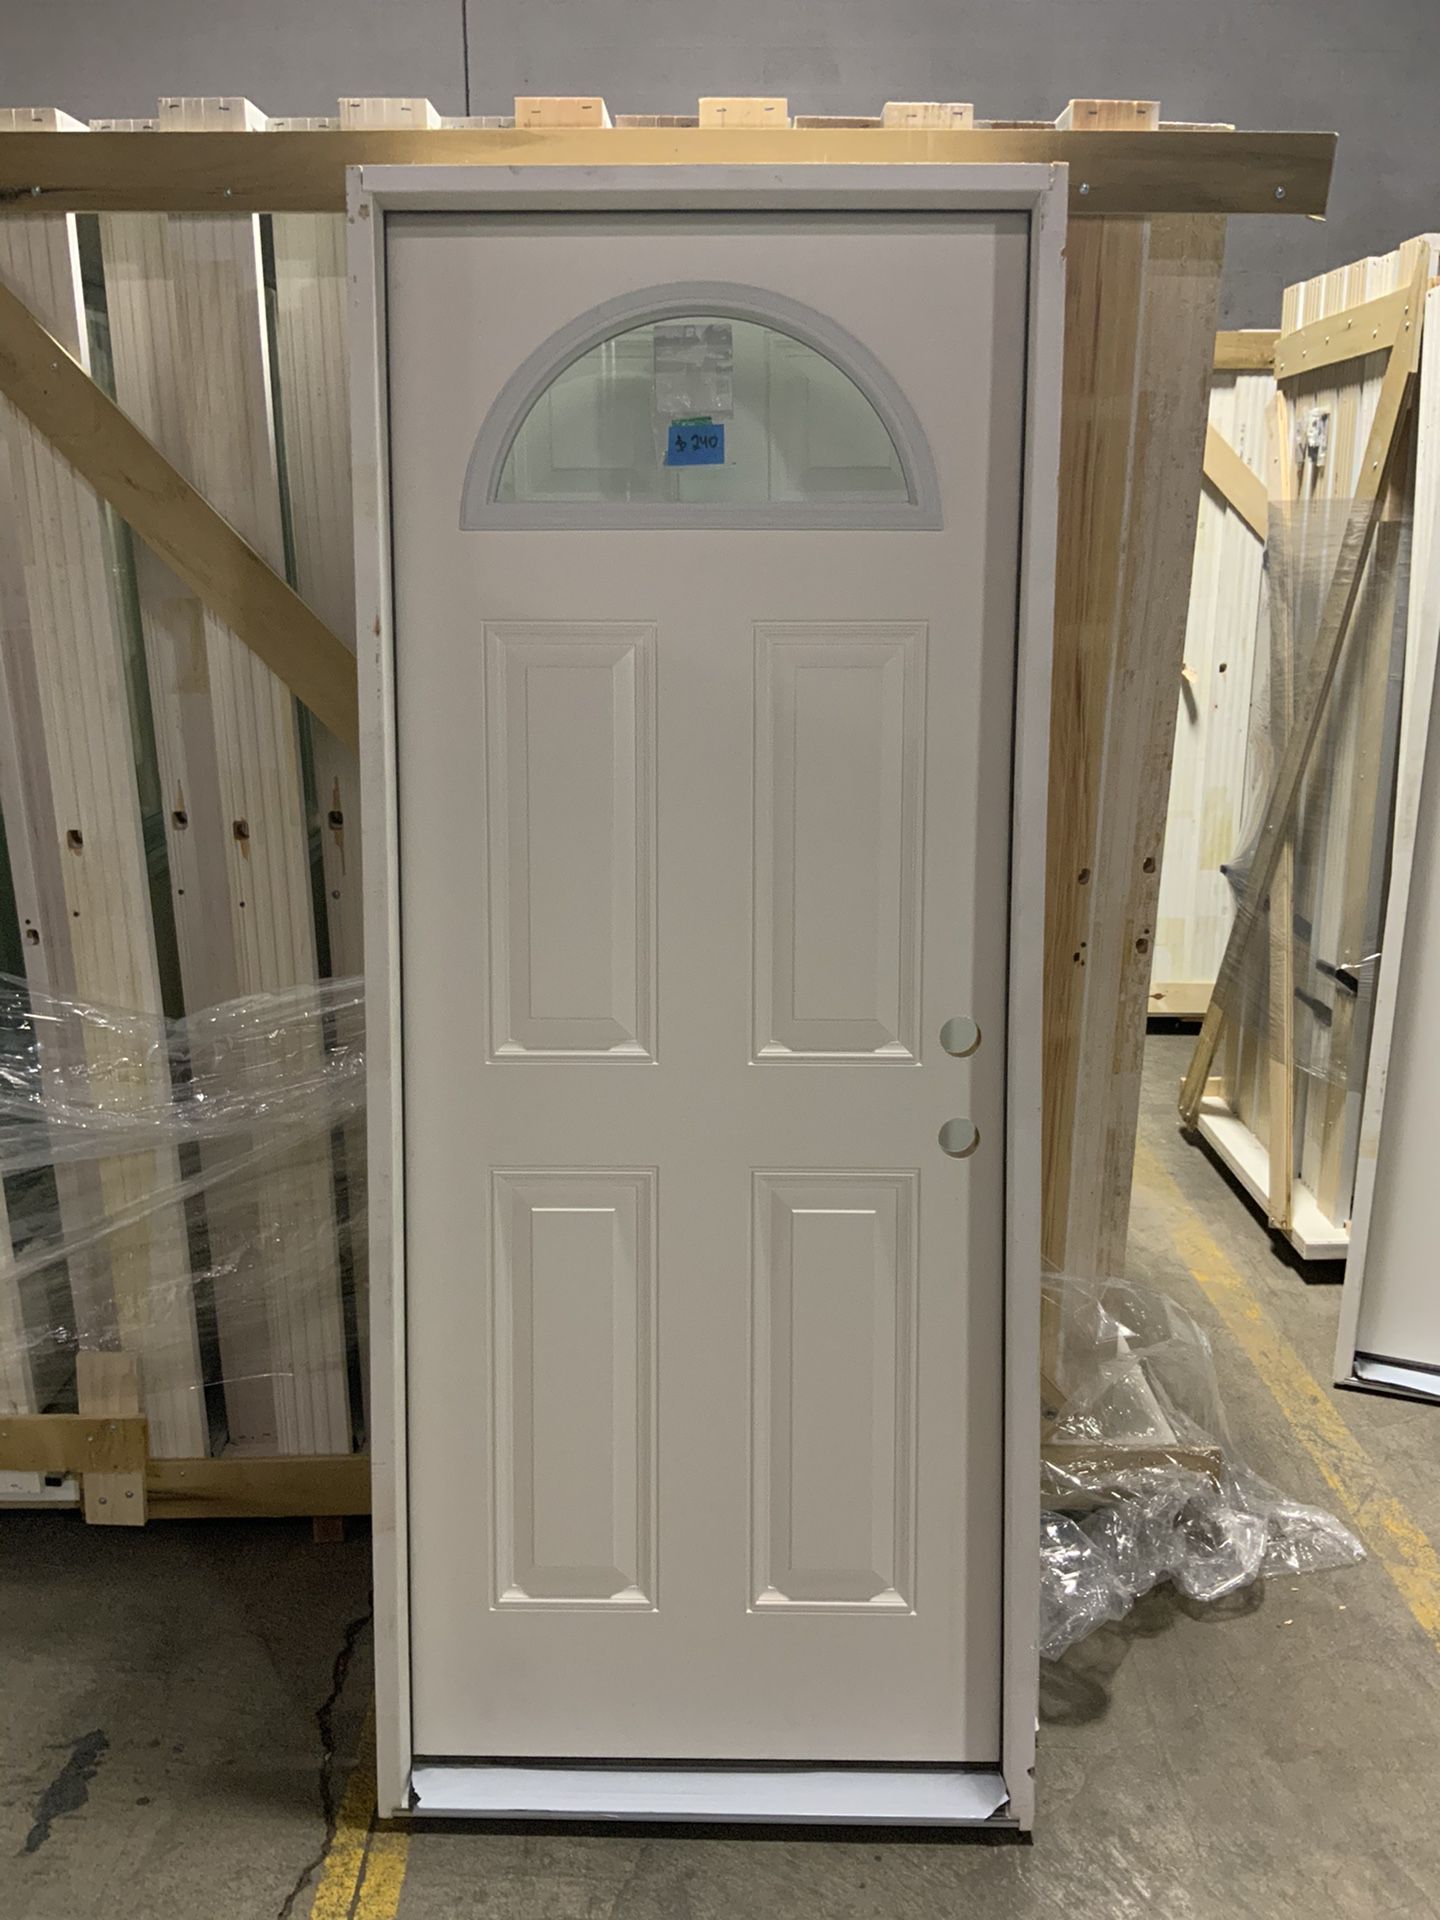 Exterior Fiberglass Door 32” x 80” for cheap